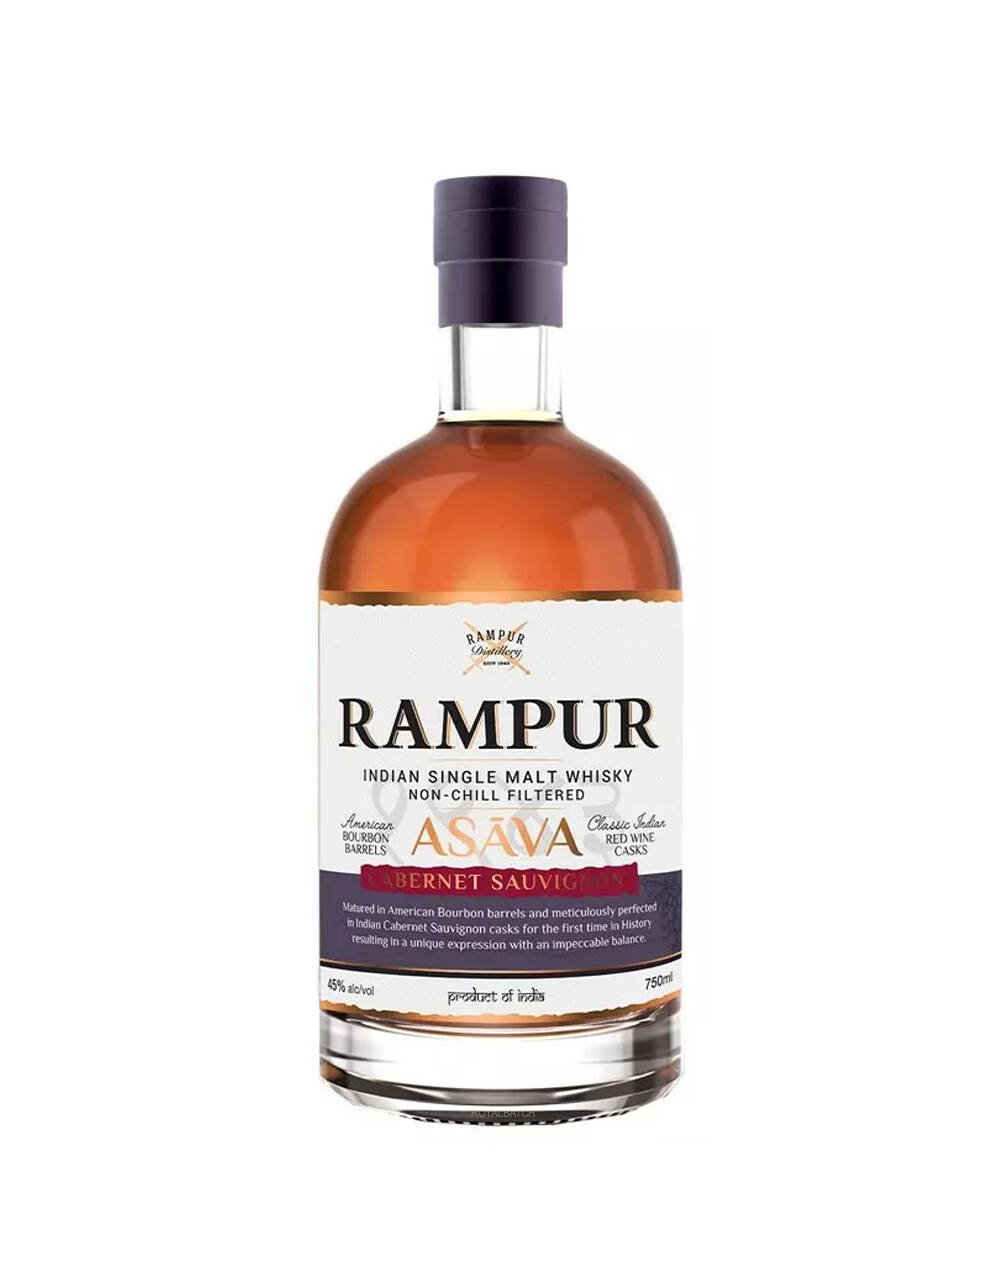 Rampur Asava Cabernet Sauvignon Indian Single Malt Whisky